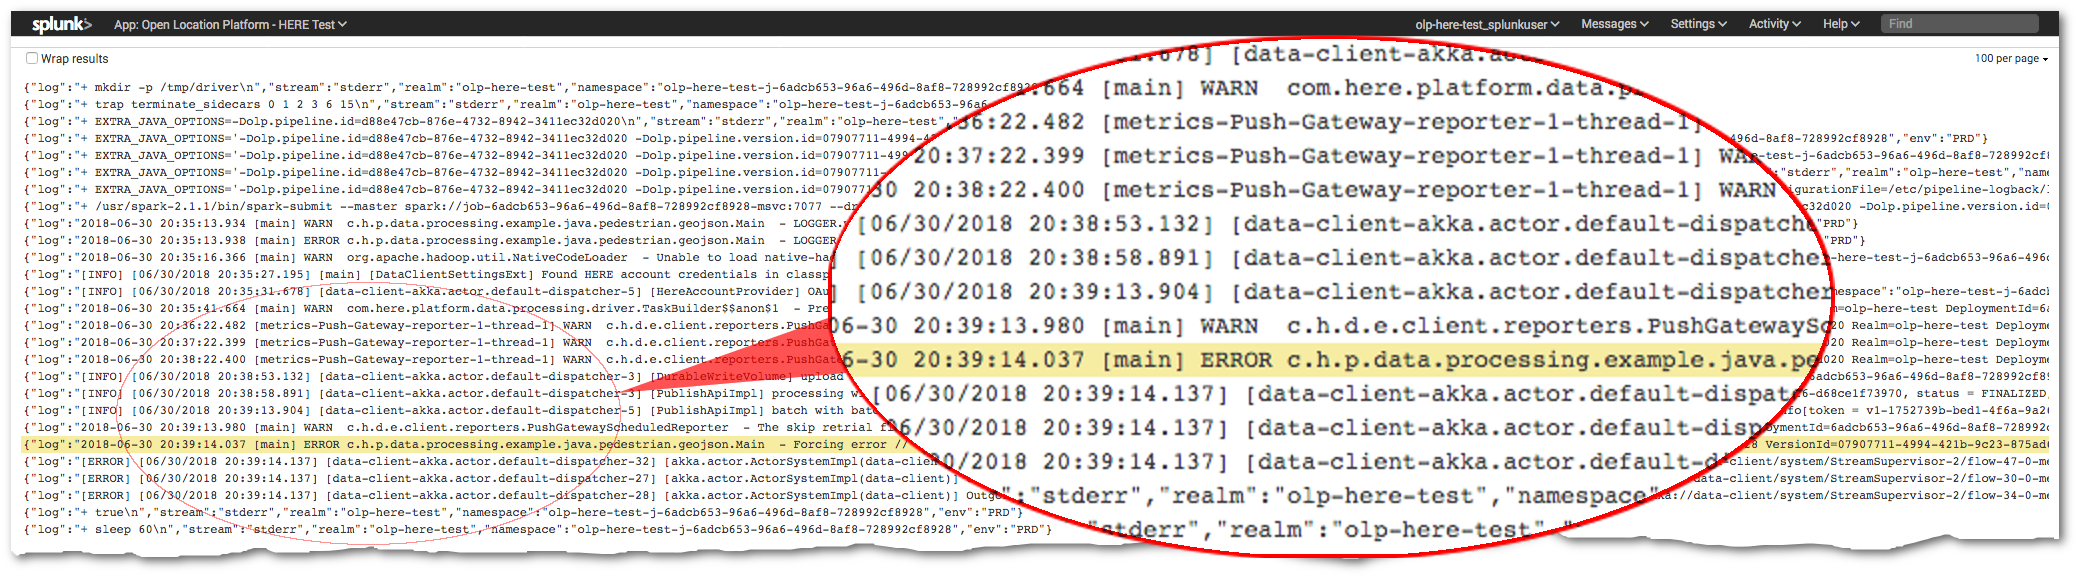 Screen capture of Splunk log entries around failure event.